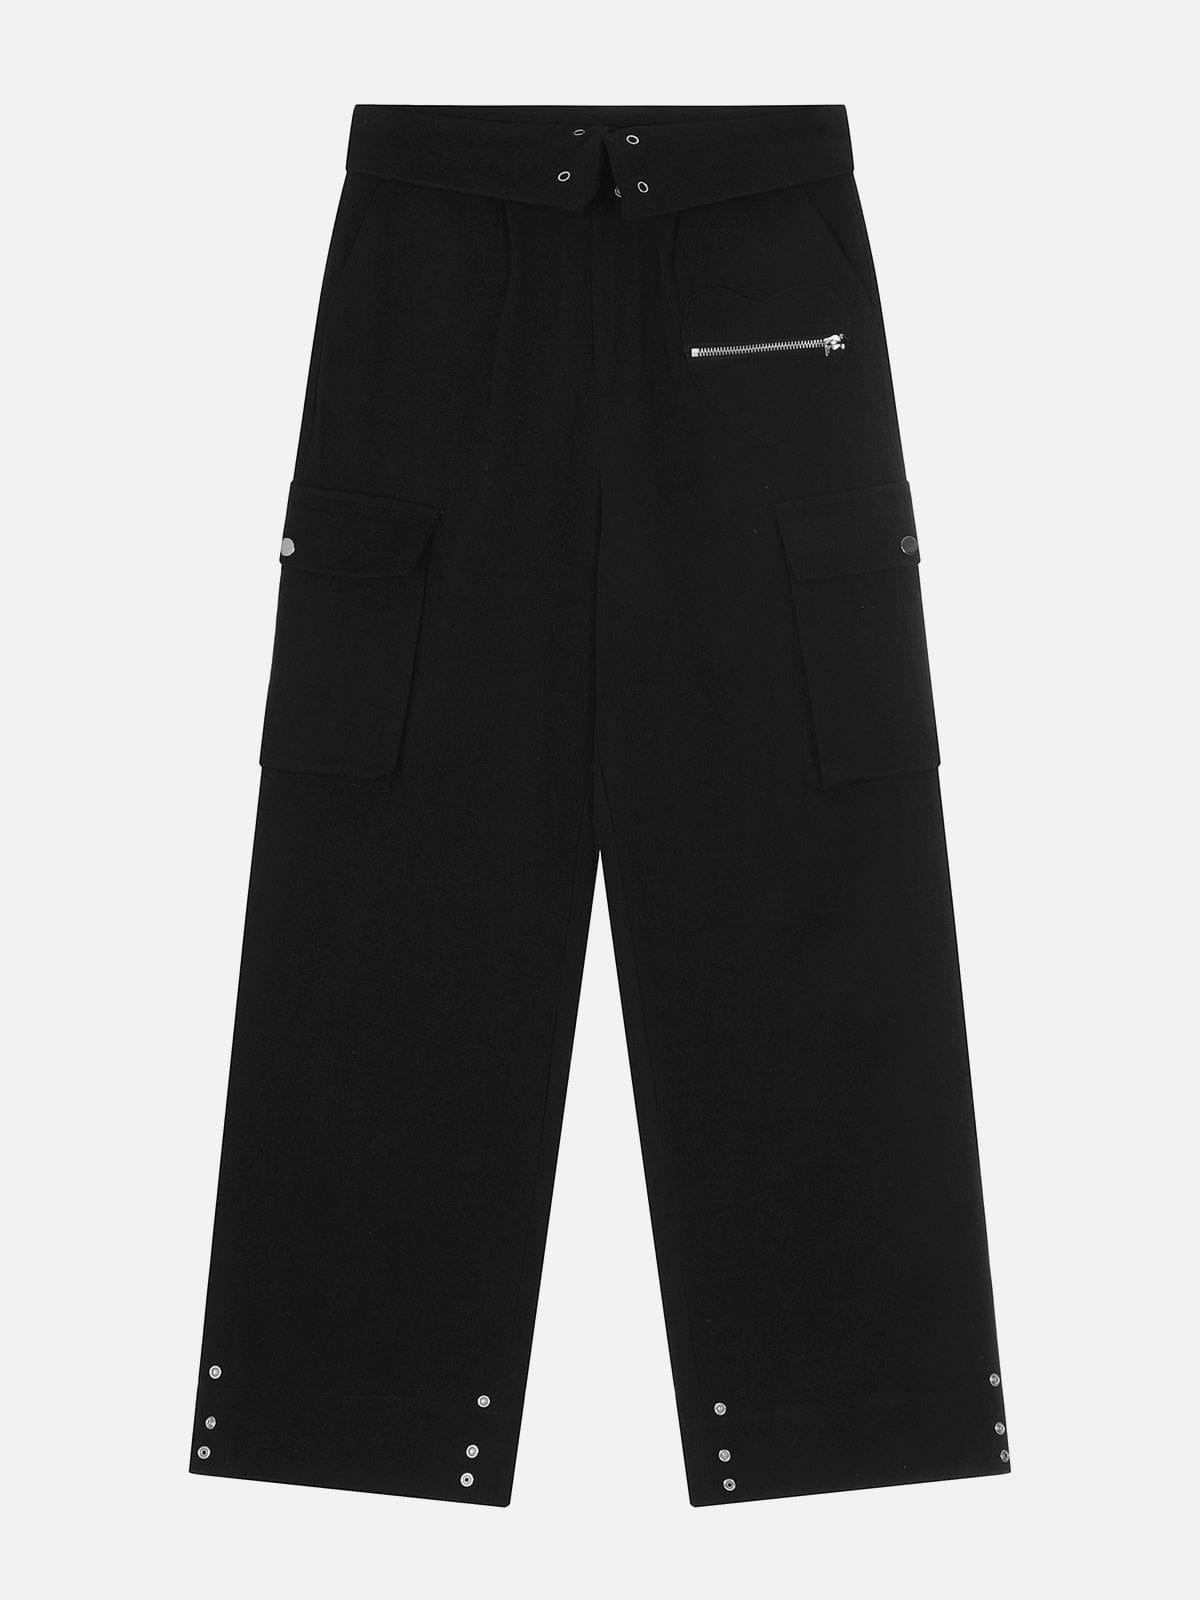 Majesda® - Zipper Pocket Cargo Pants outfit ideas streetwear fashion